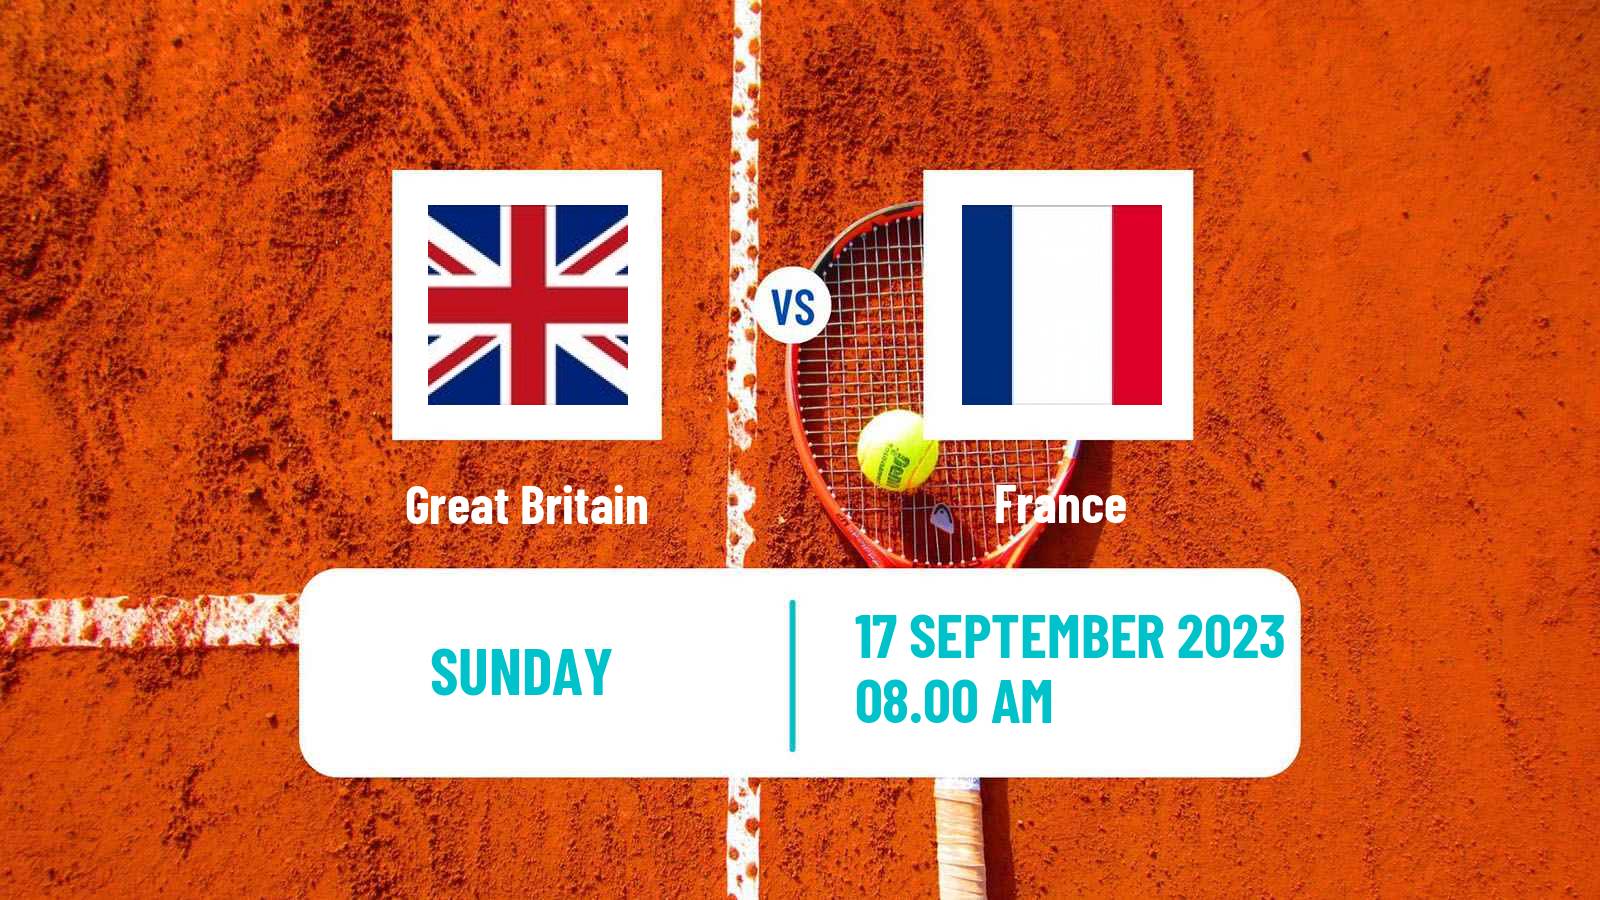 Tennis Davis Cup - World Group Teams Great Britain - France